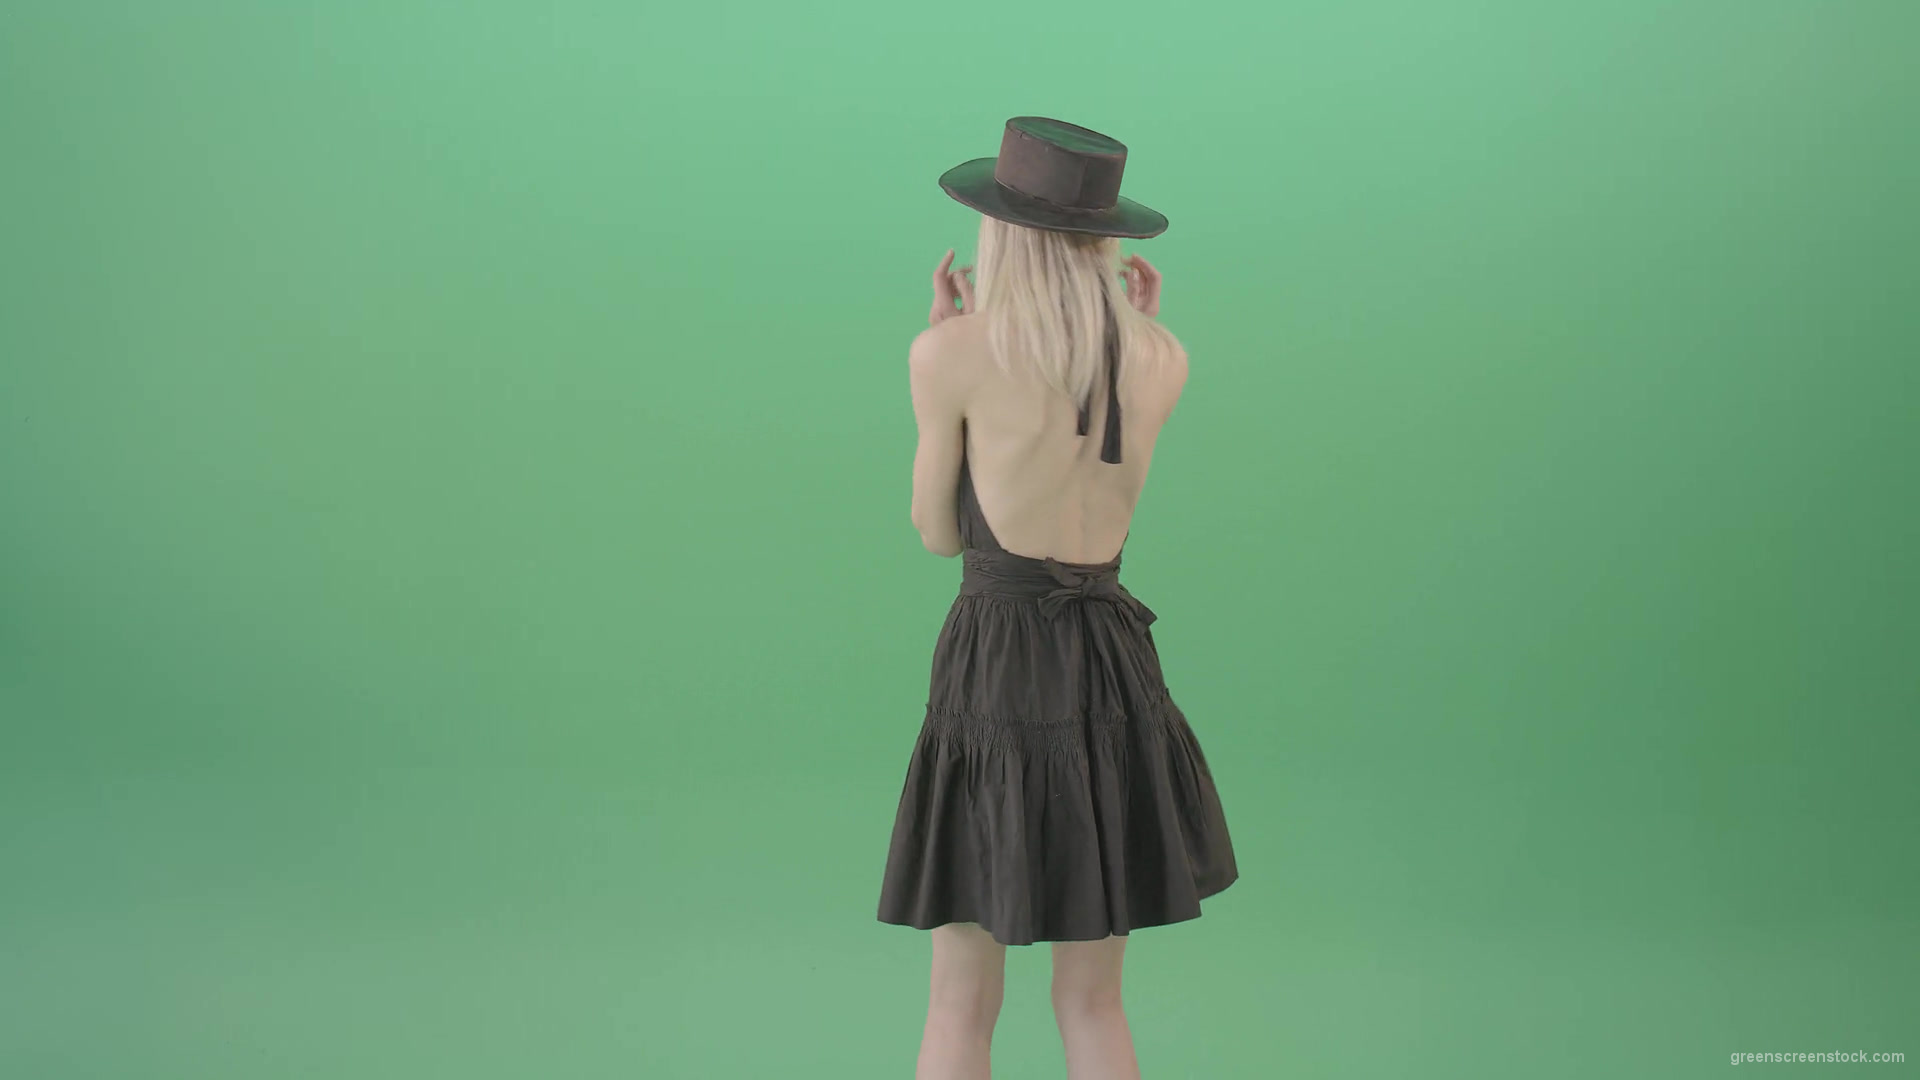 Blonde-girl-in-black-hat-with-open-back-posing-in-dark-dress-over-green-screen-4K-Video-Footage-1920_004 Green Screen Stock